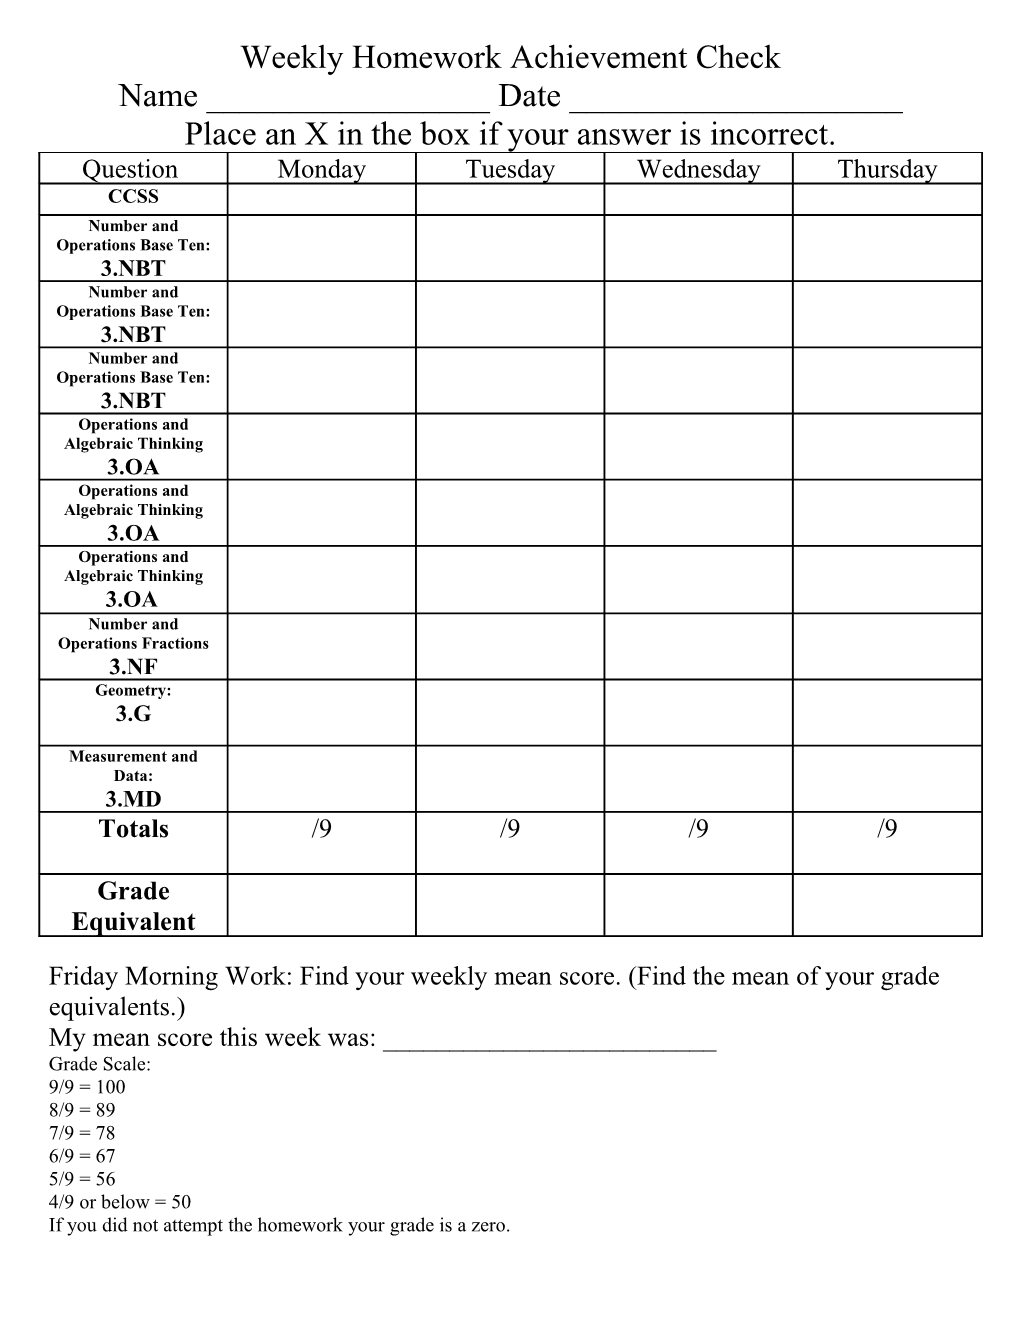 Weekly Homework Sheet s8